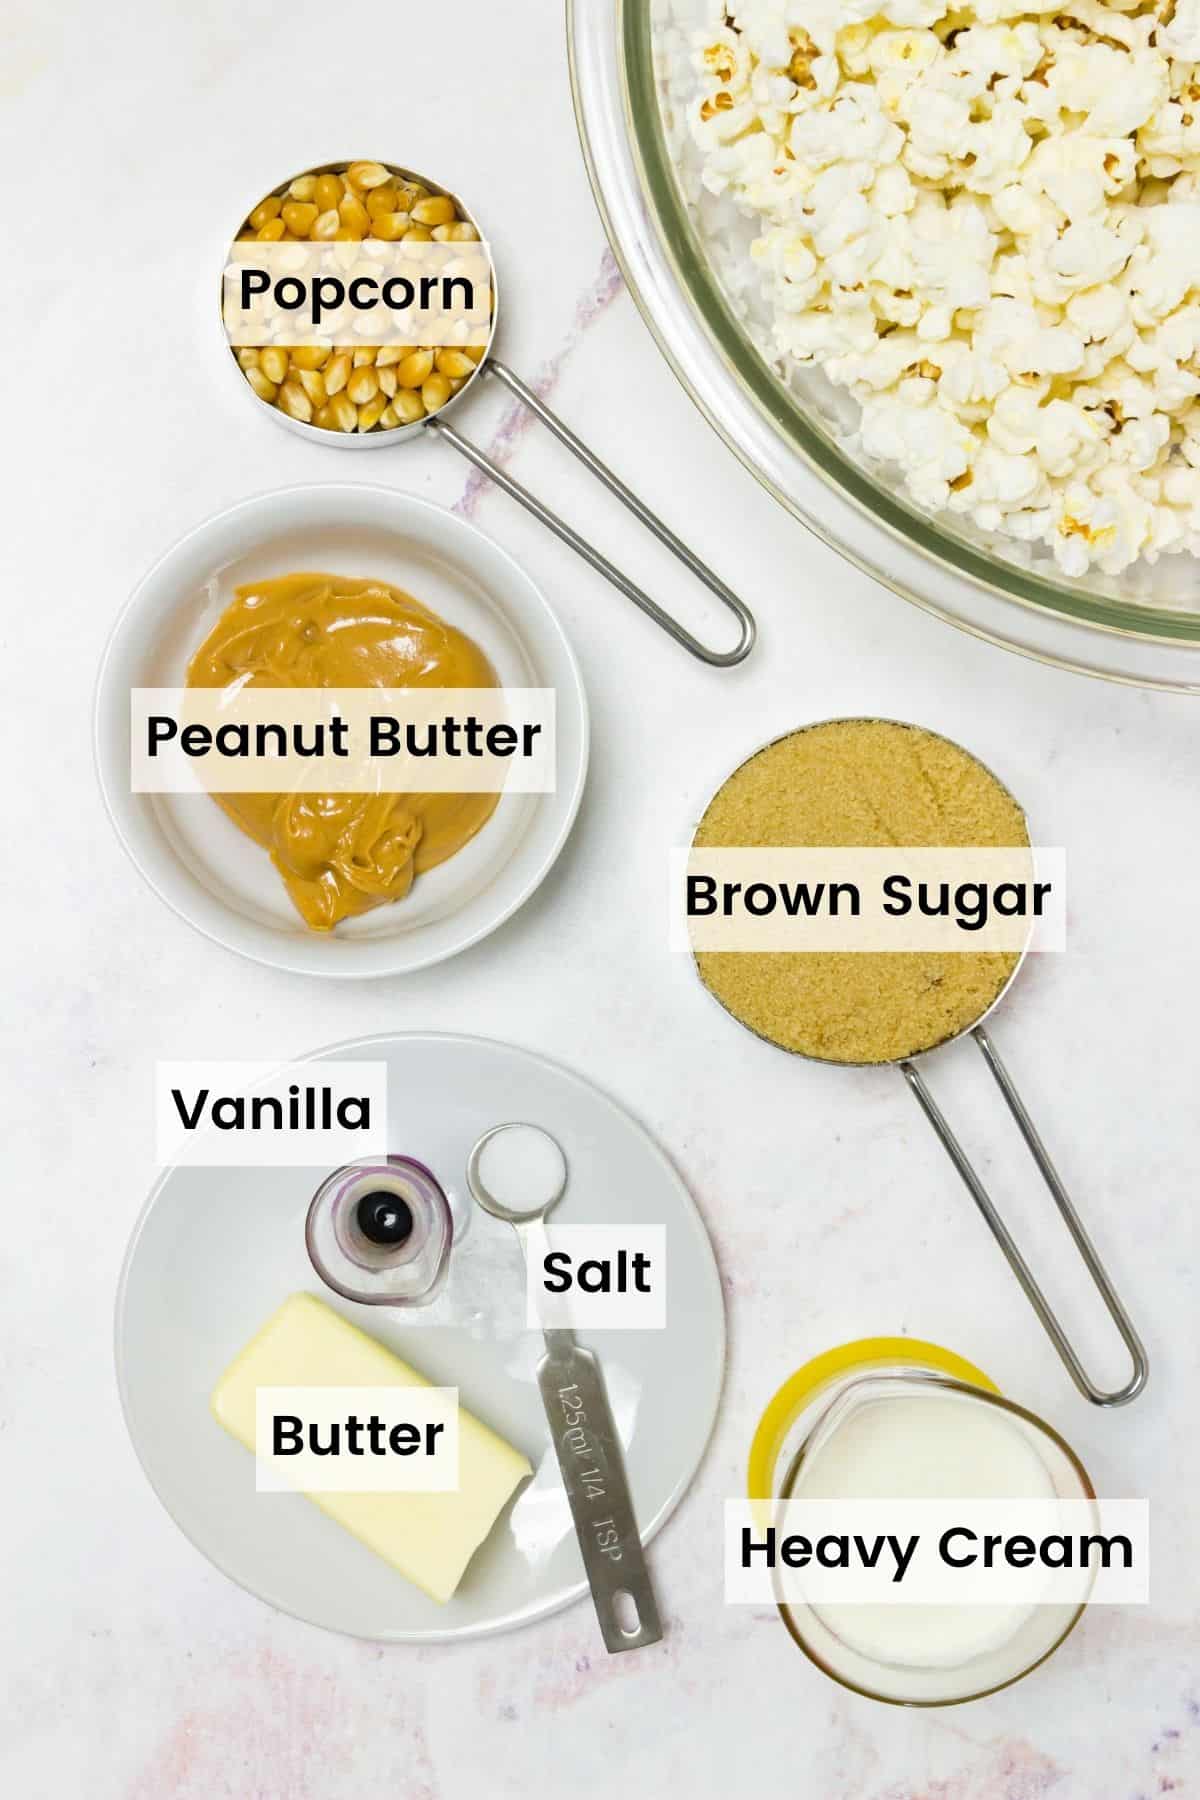 Ingredients needed for peanut butter butterscotch popcorn: popcorn, peanut butter, butter, sugar, vanilla, salt.